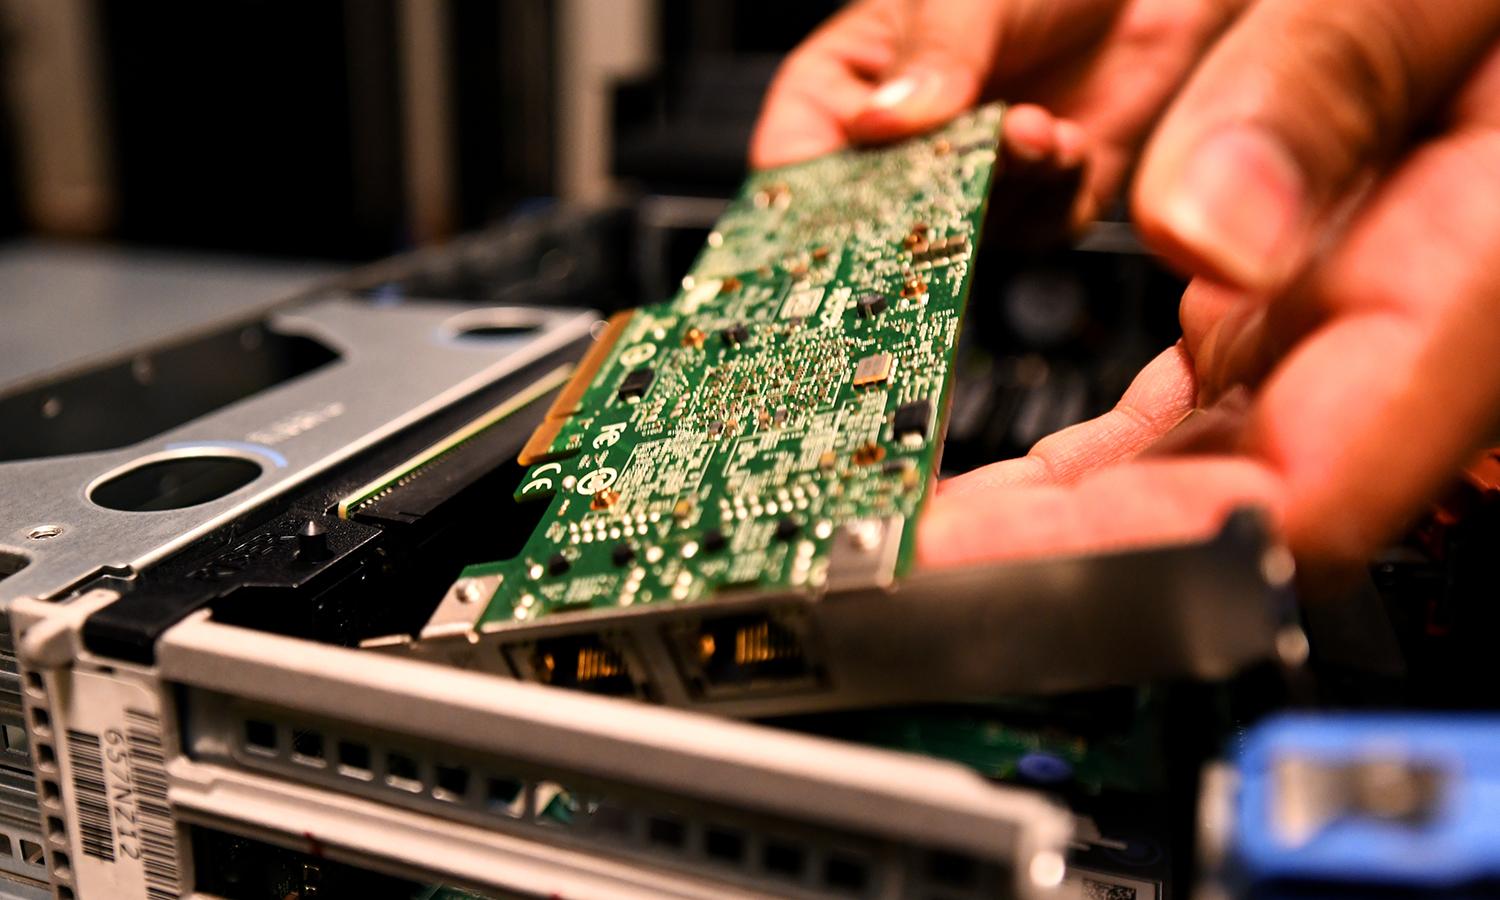 A technician replaces a computer circuit board